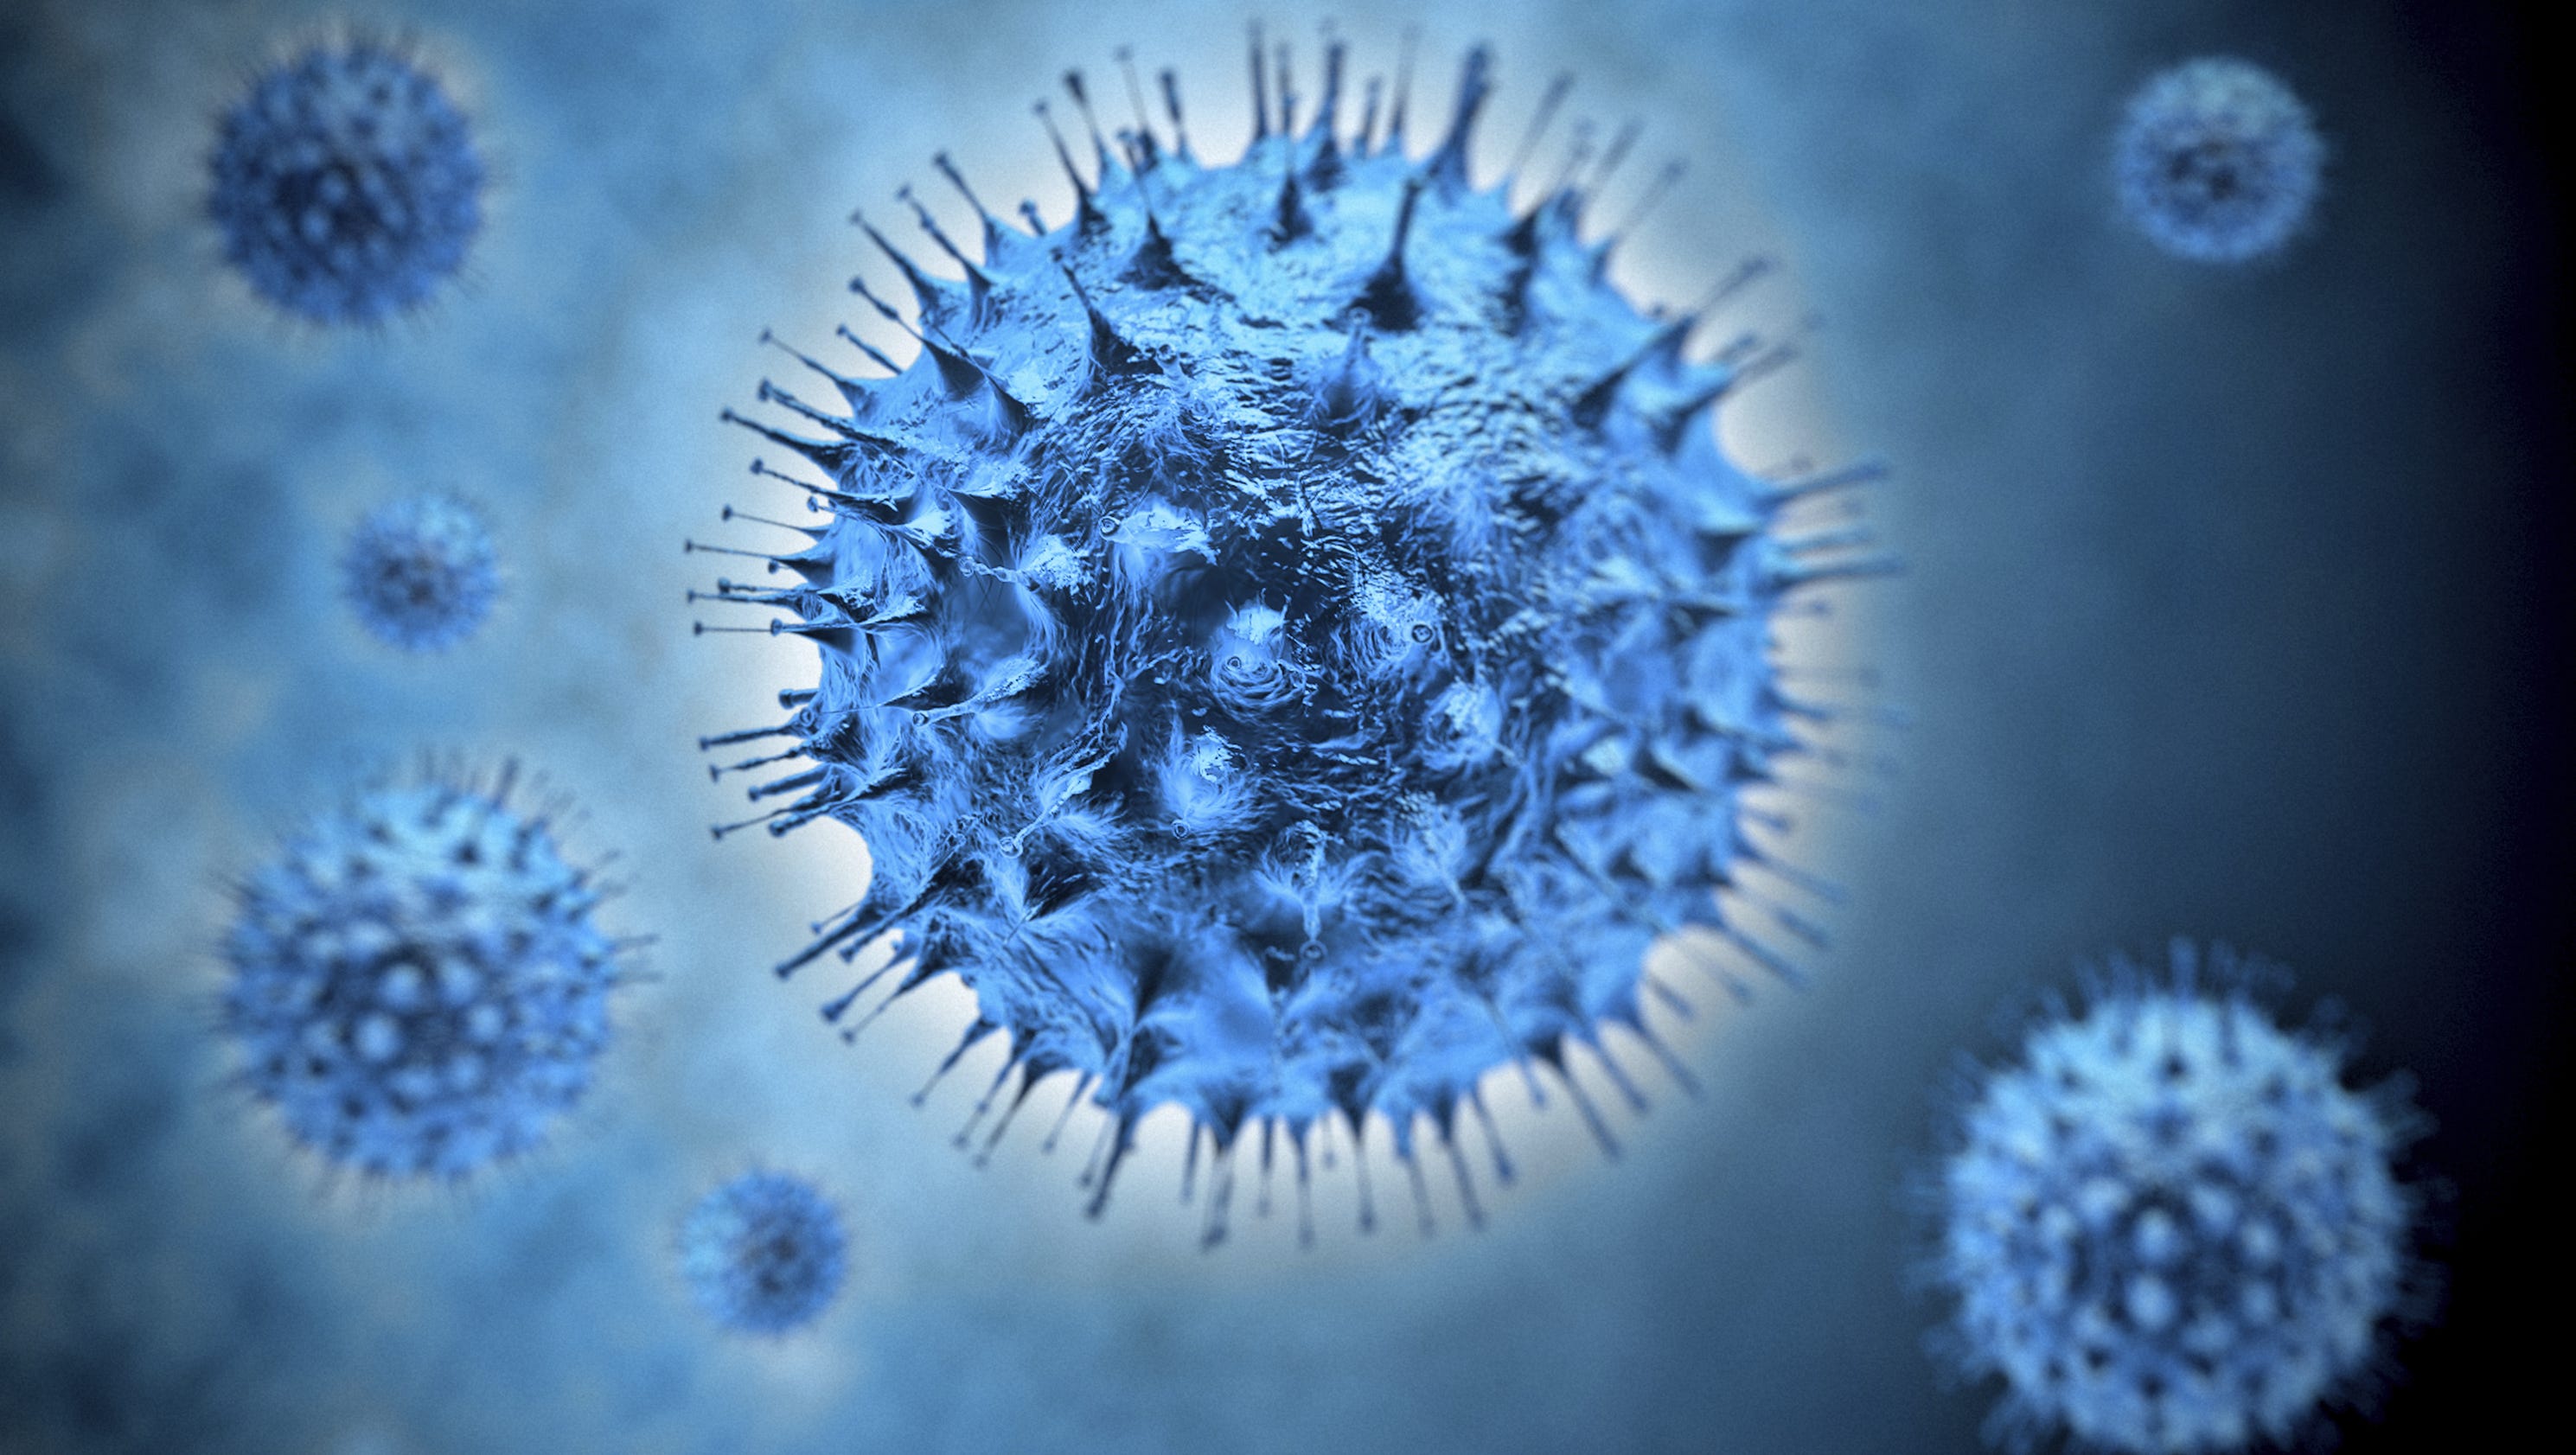 Www virus. Вирус герпеса и коронавирус. Вирус Эпштейна-Барр под микроскопом. Вирусные заболевания коронавирус.